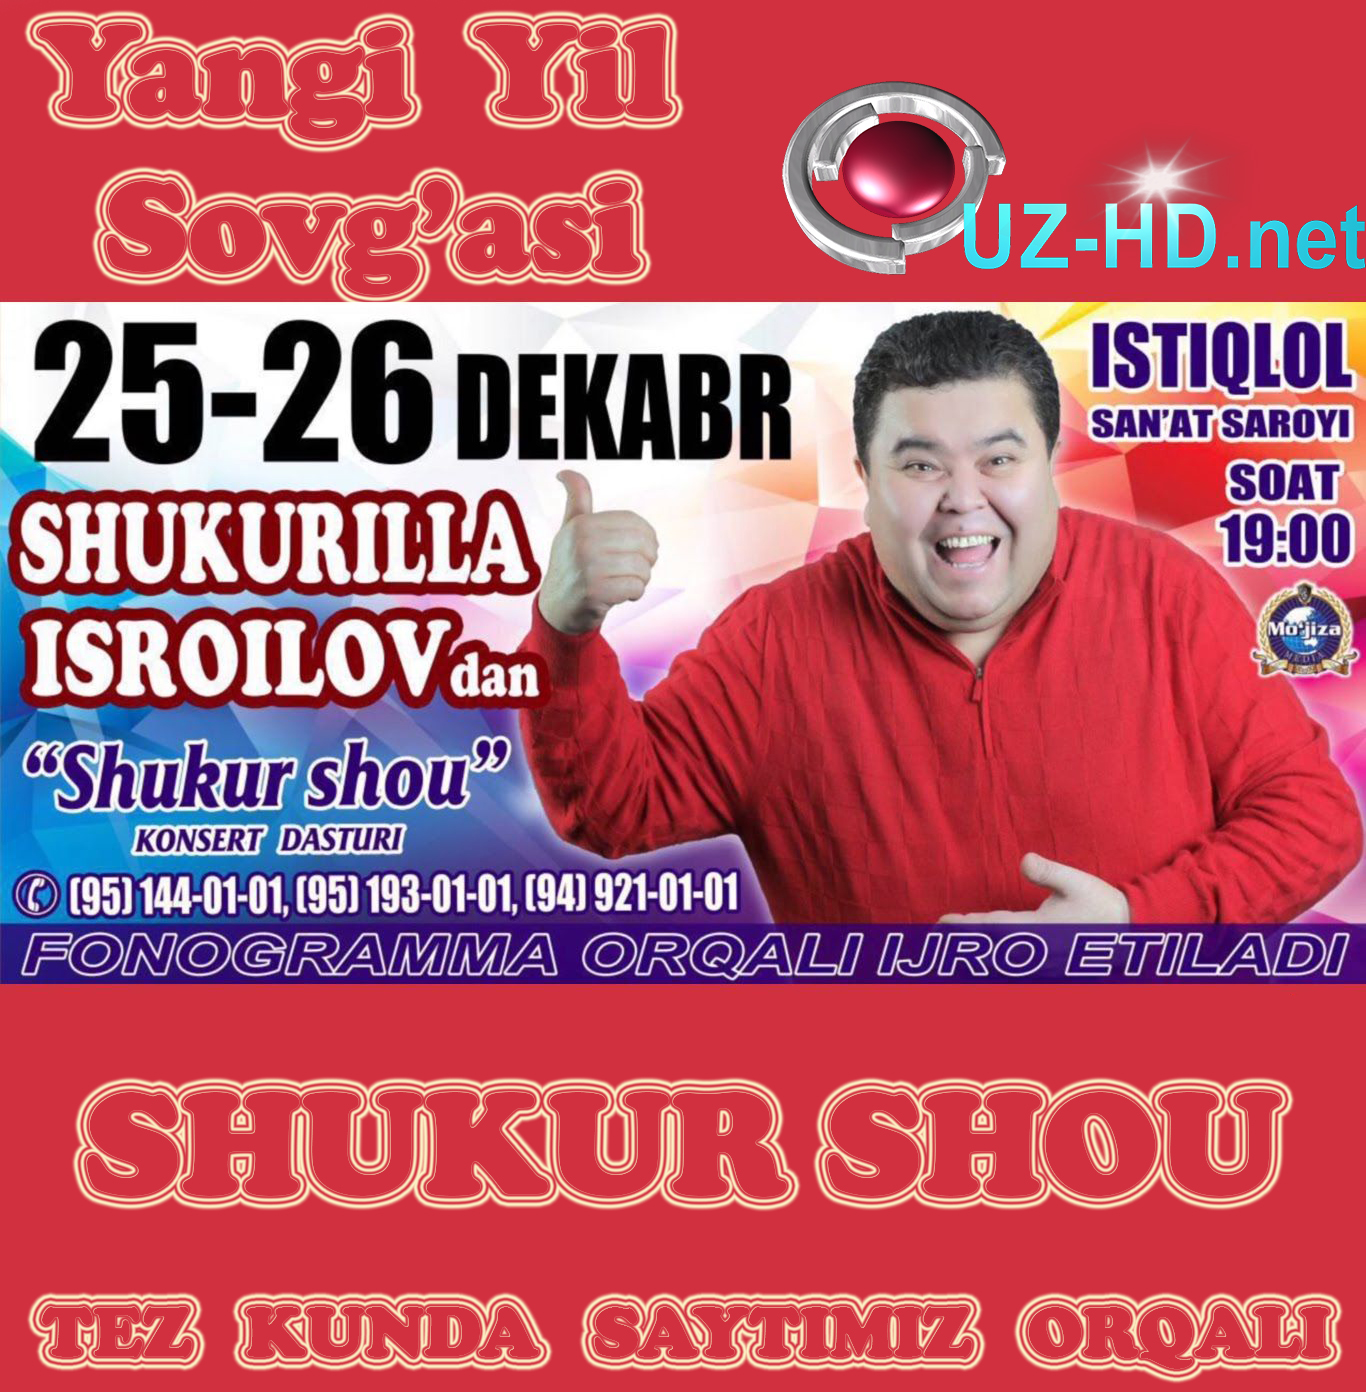 Shukurullo Isroilovdan - Shukur SHOU 2015-2016